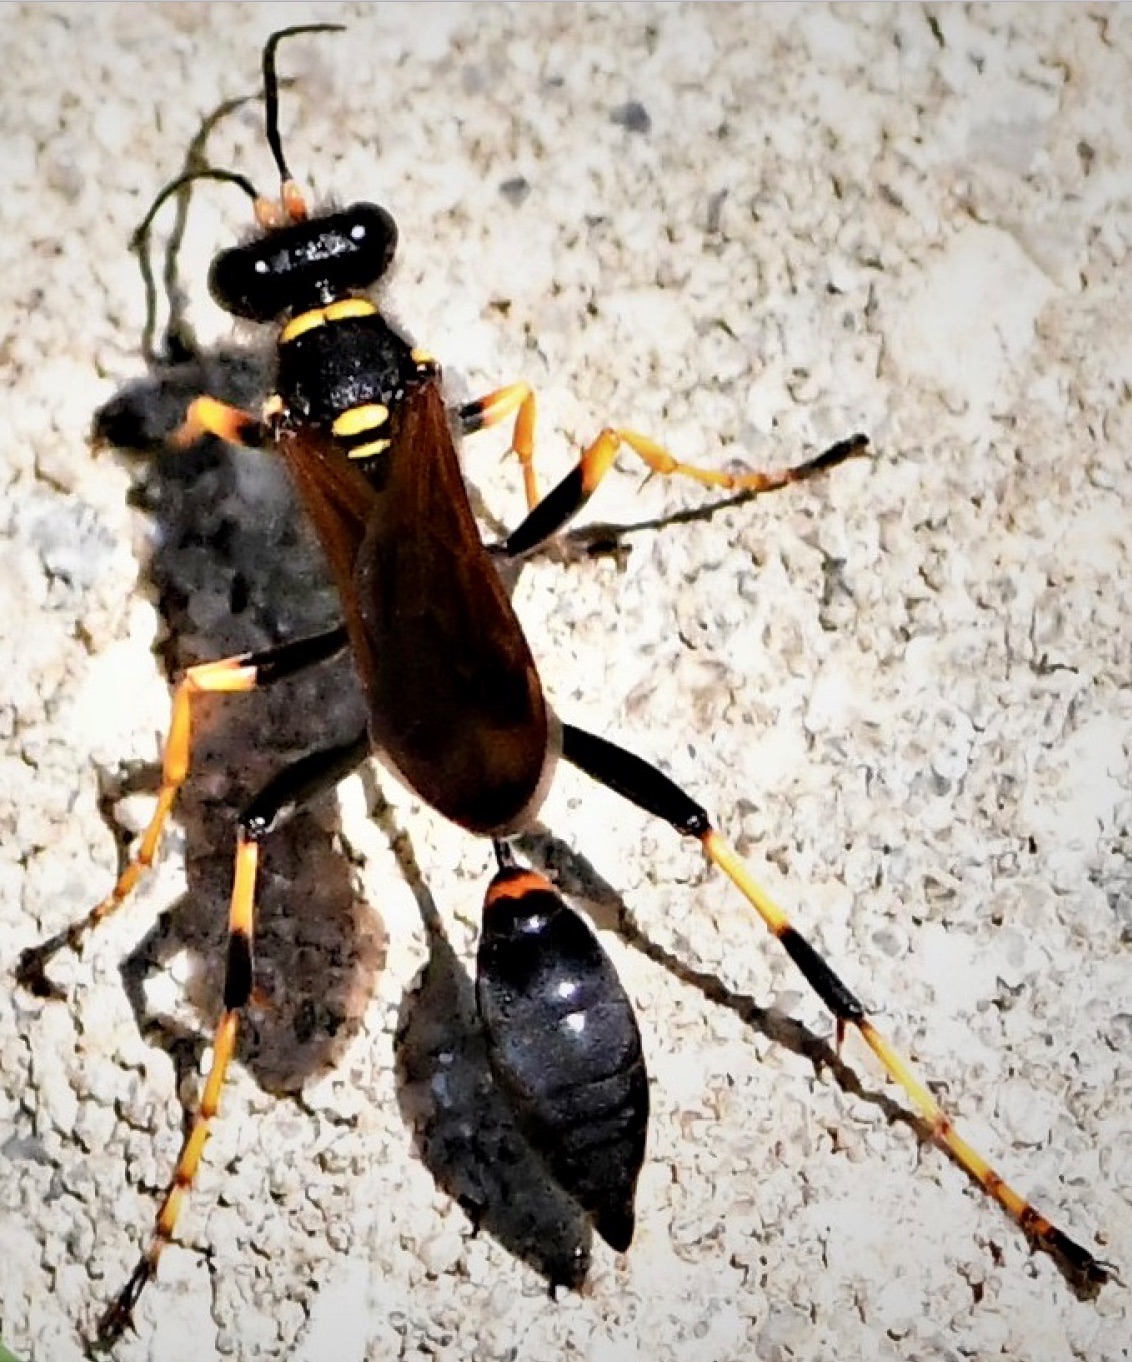 Black and Yellow Mud Dauber Wasp (Sceliphron caementarium)